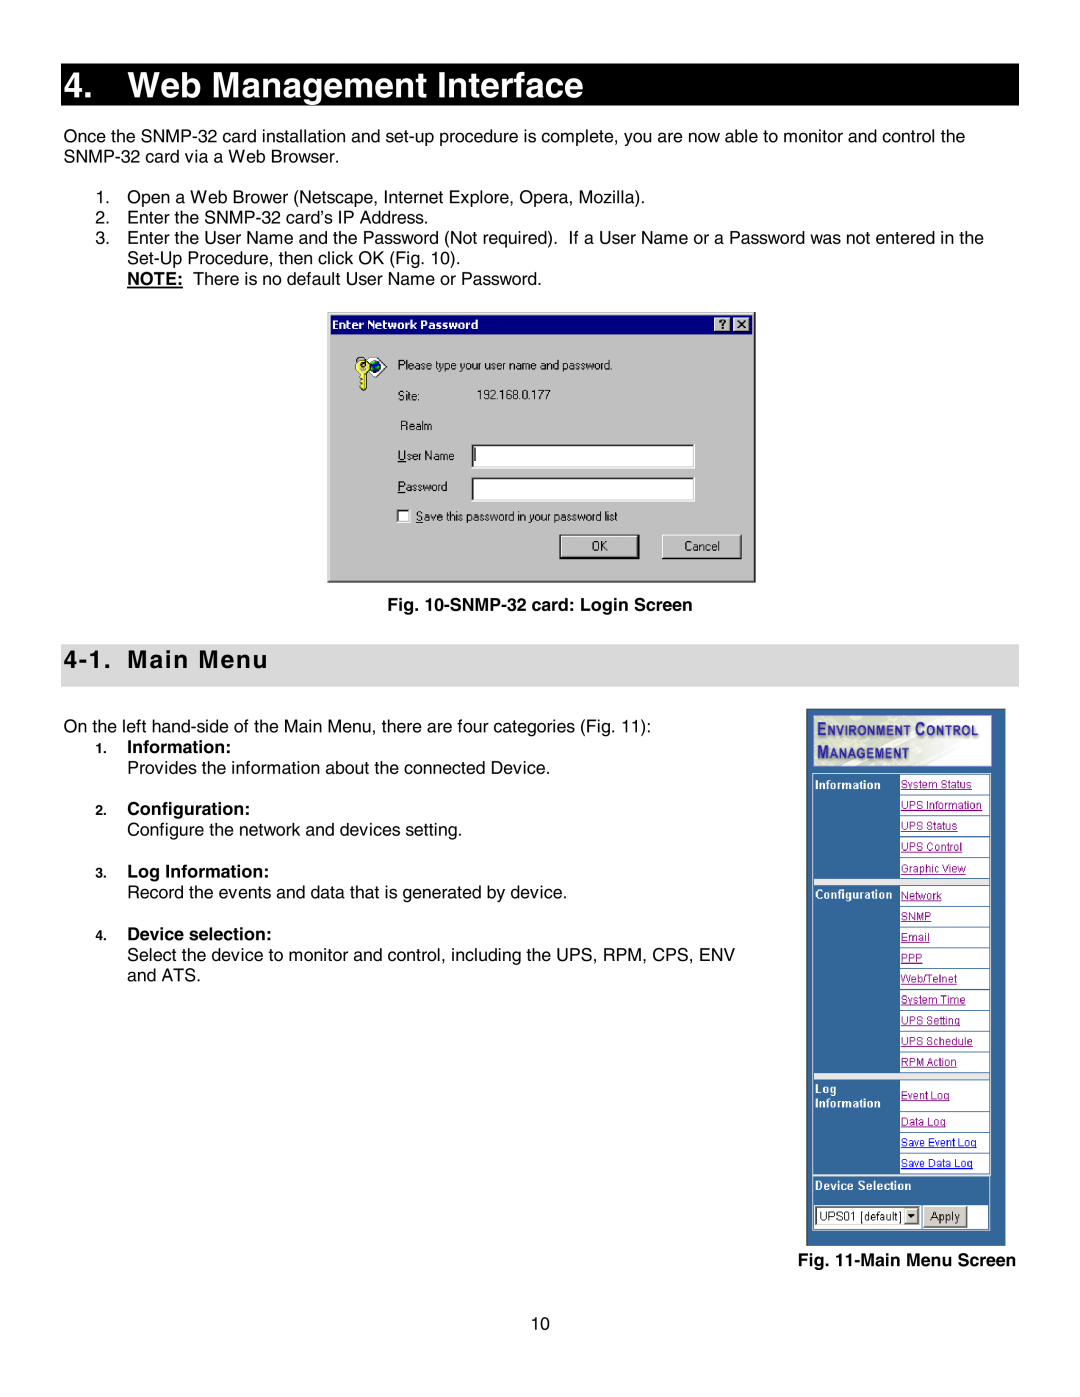 Minuteman UPS SNMP-32 Series Web Management Interface, Main Menu, SNMP-32 card Login Screen, Information, Configuration 